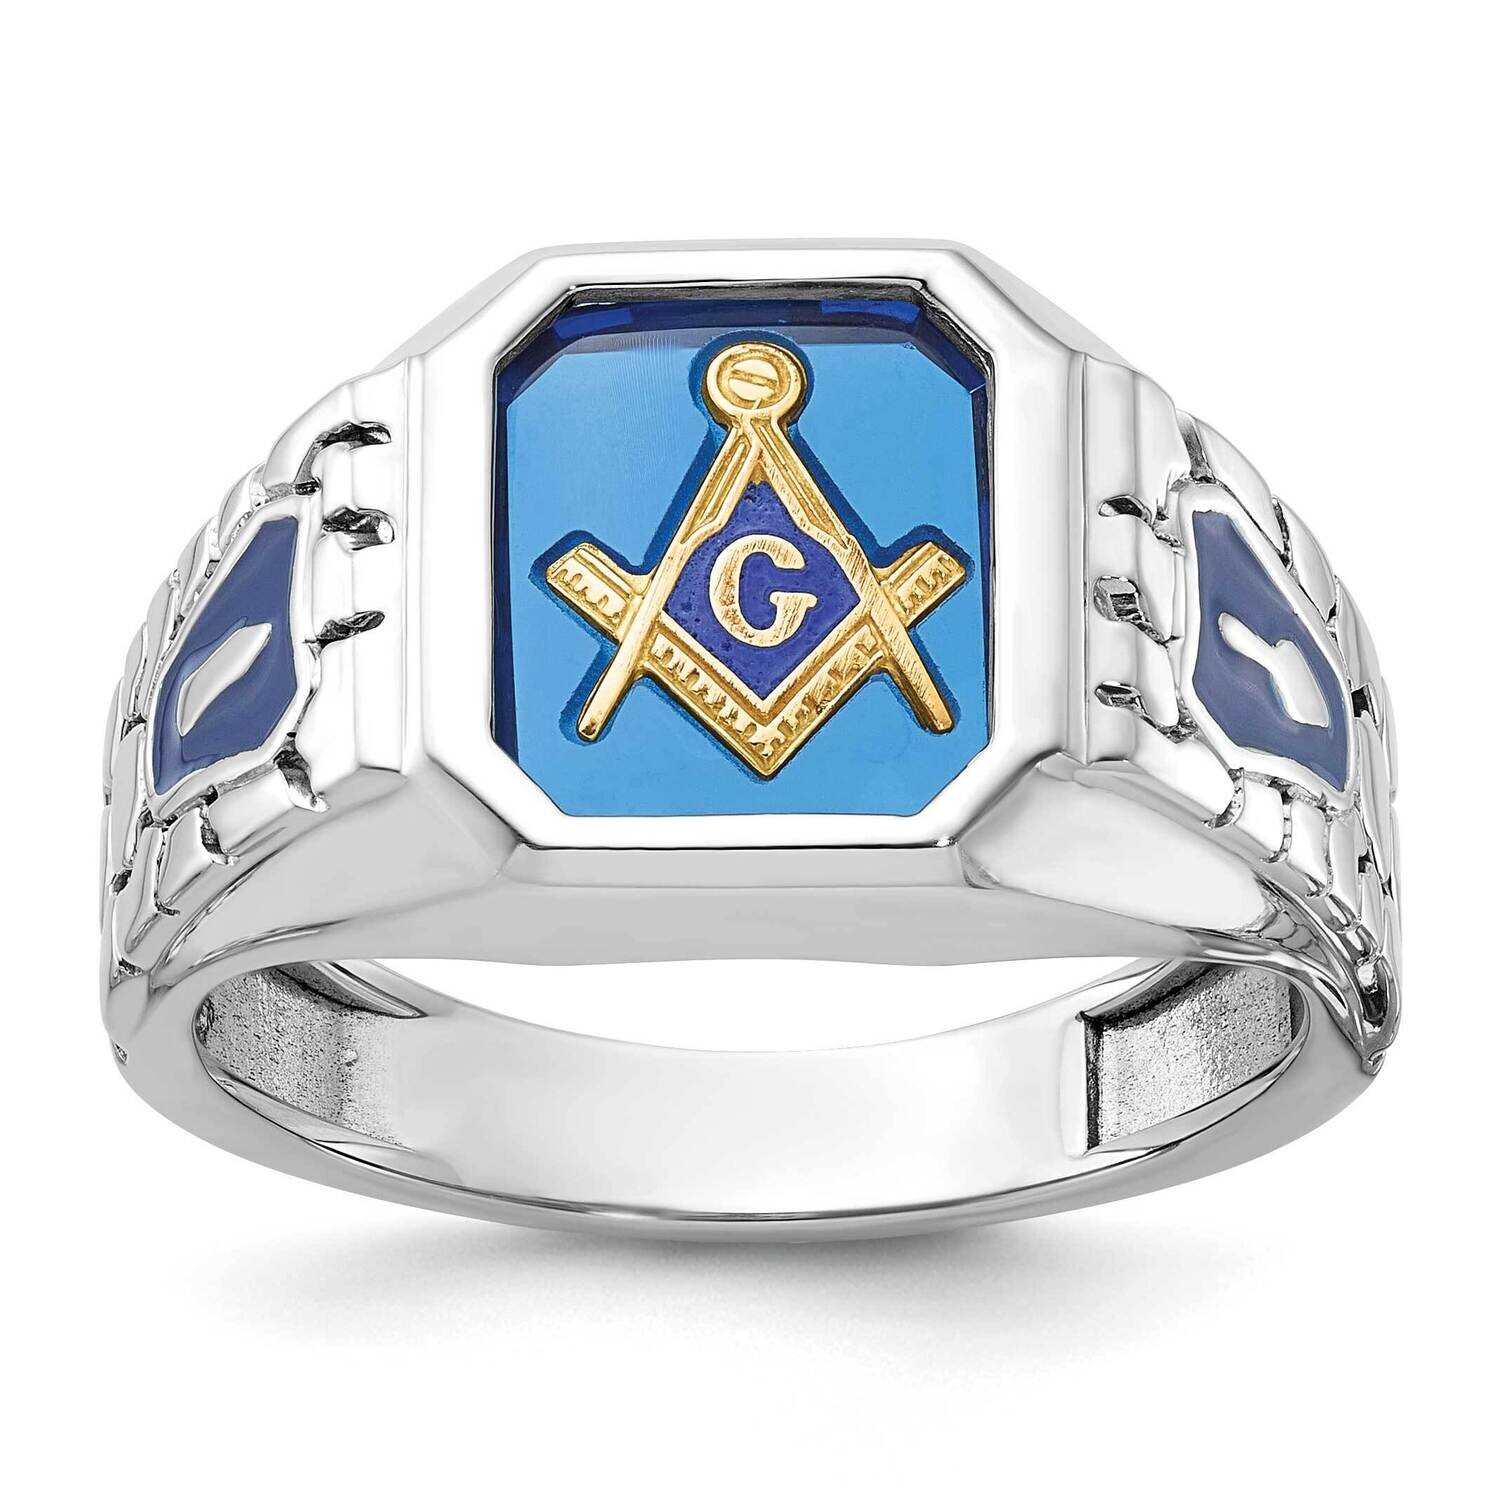 Ibgoodman Men's Polished Textured Blue Lodge Master Masonic Ring Mounting 14k White Gold B57699-4W